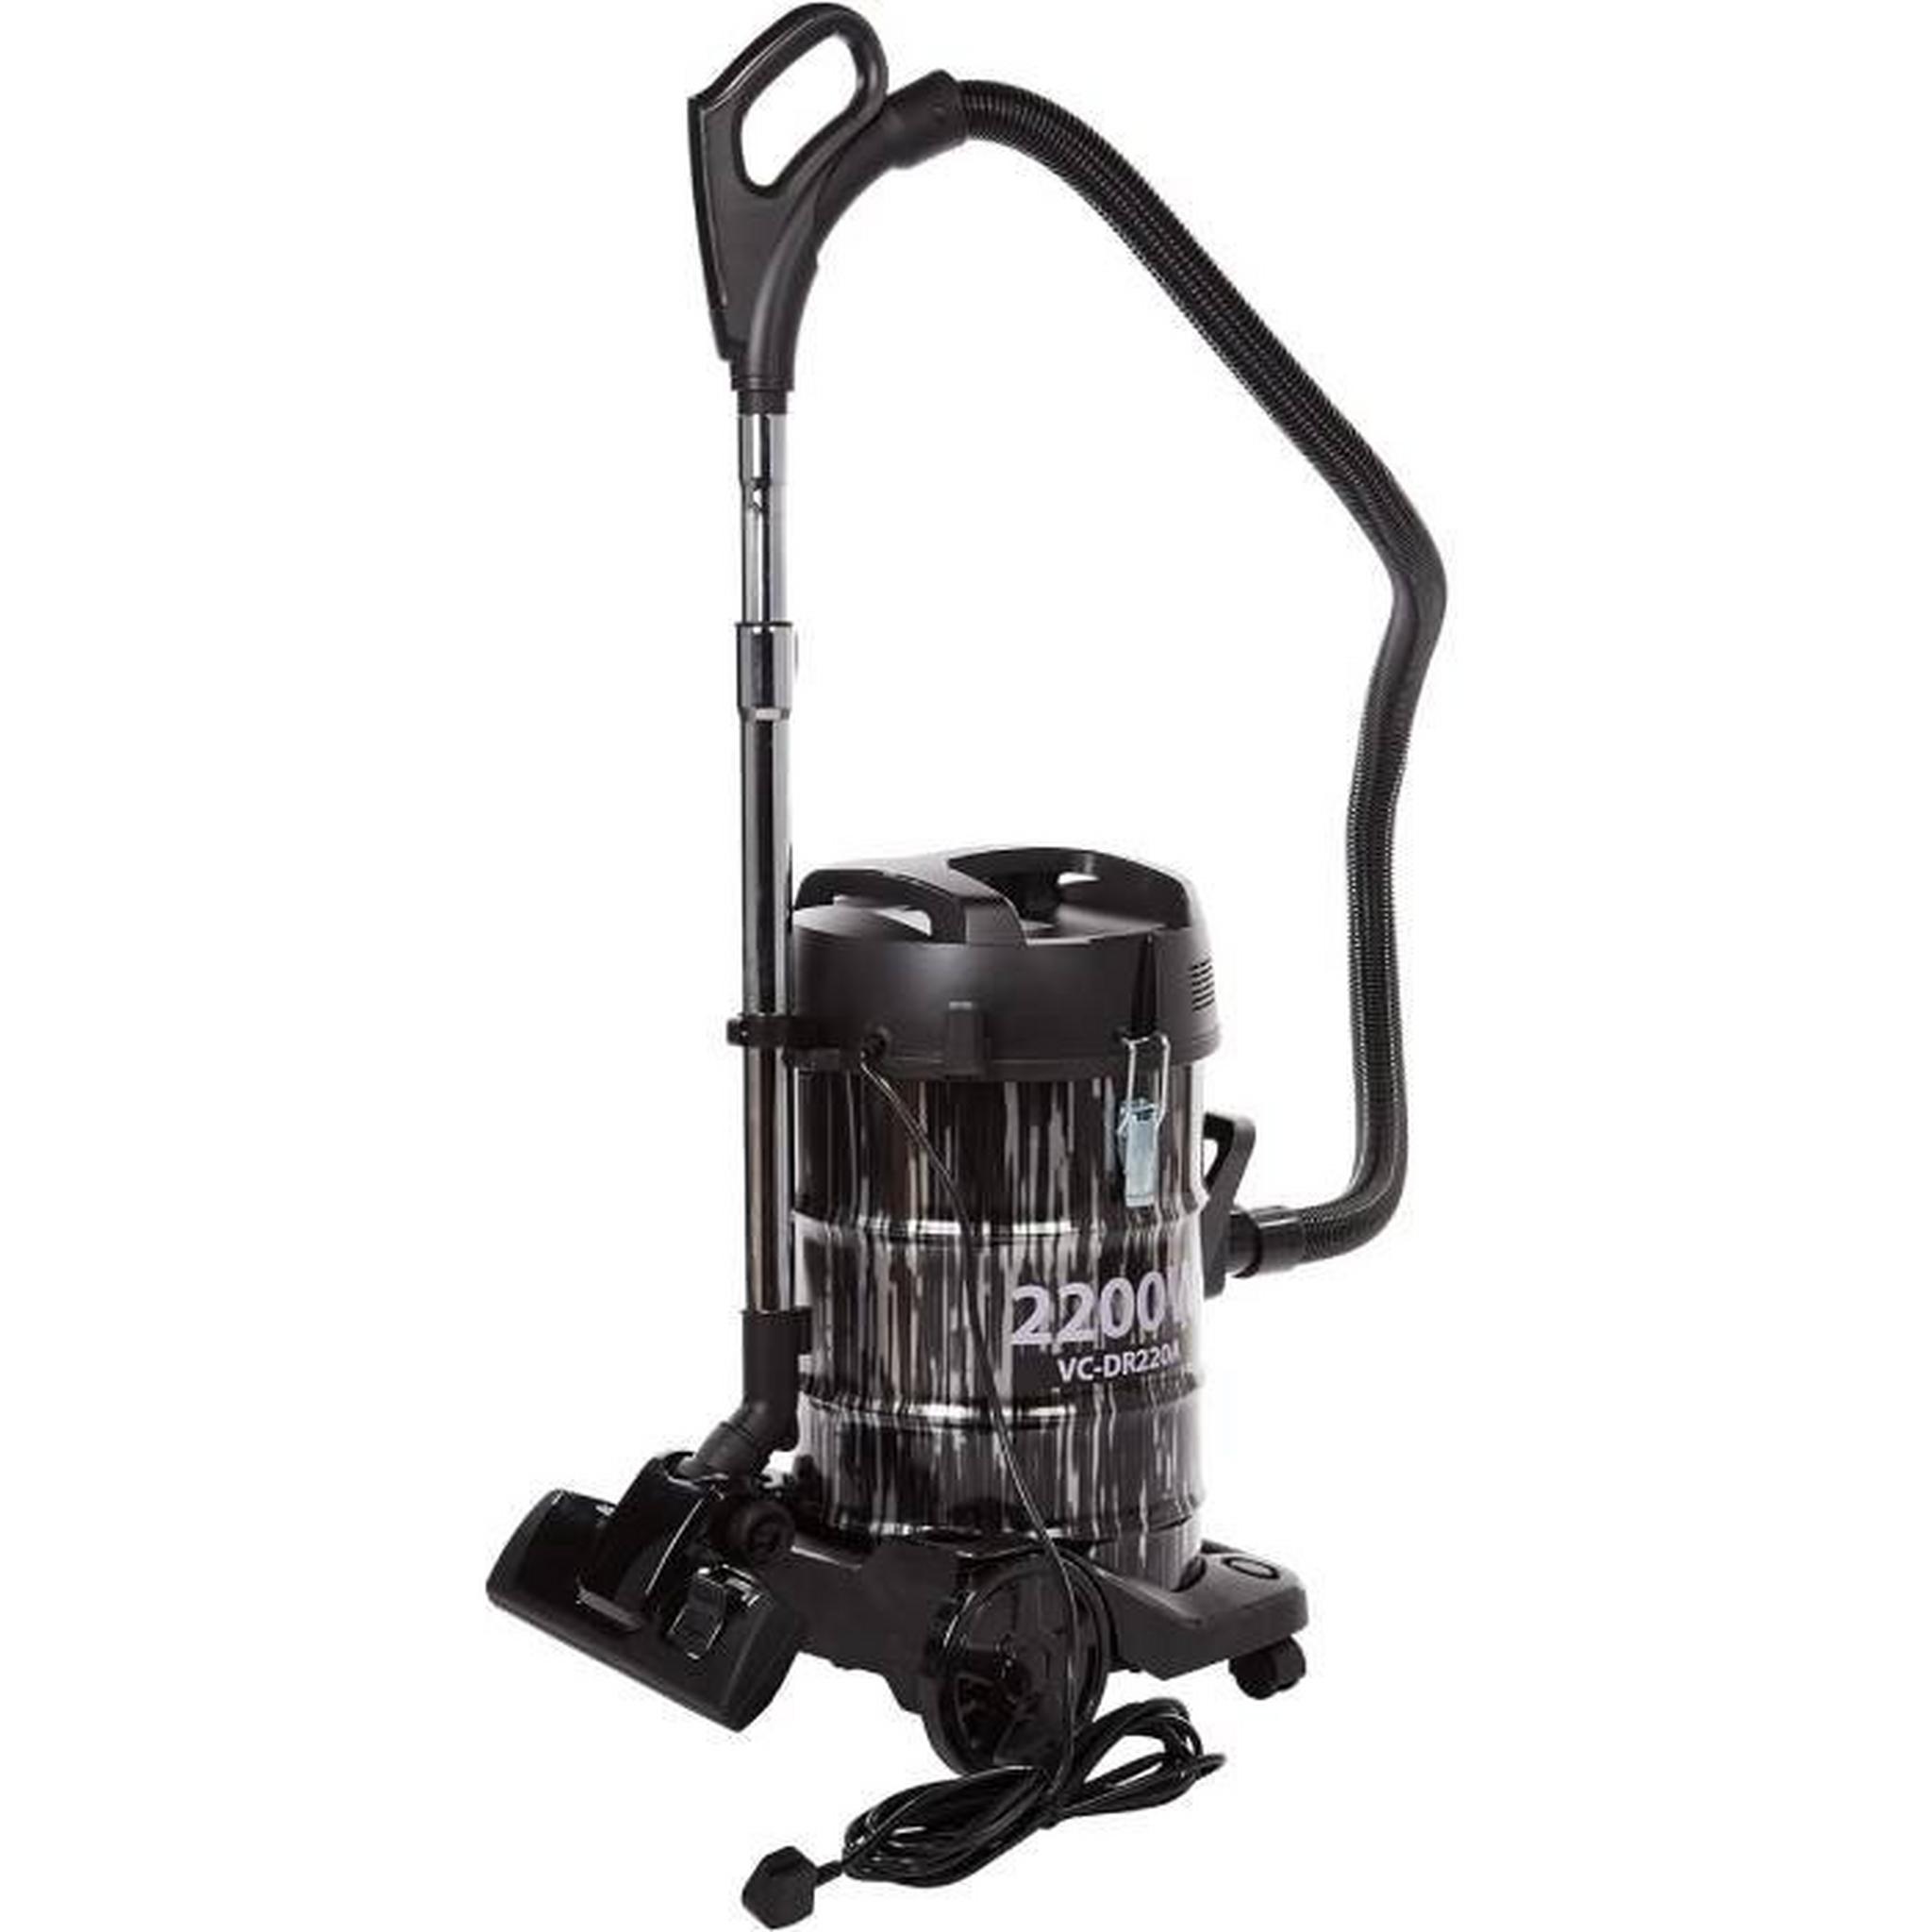 Toshiba Vacuum Cleaner 22L, 2200W, VC-DR220ABF – Black/Grey